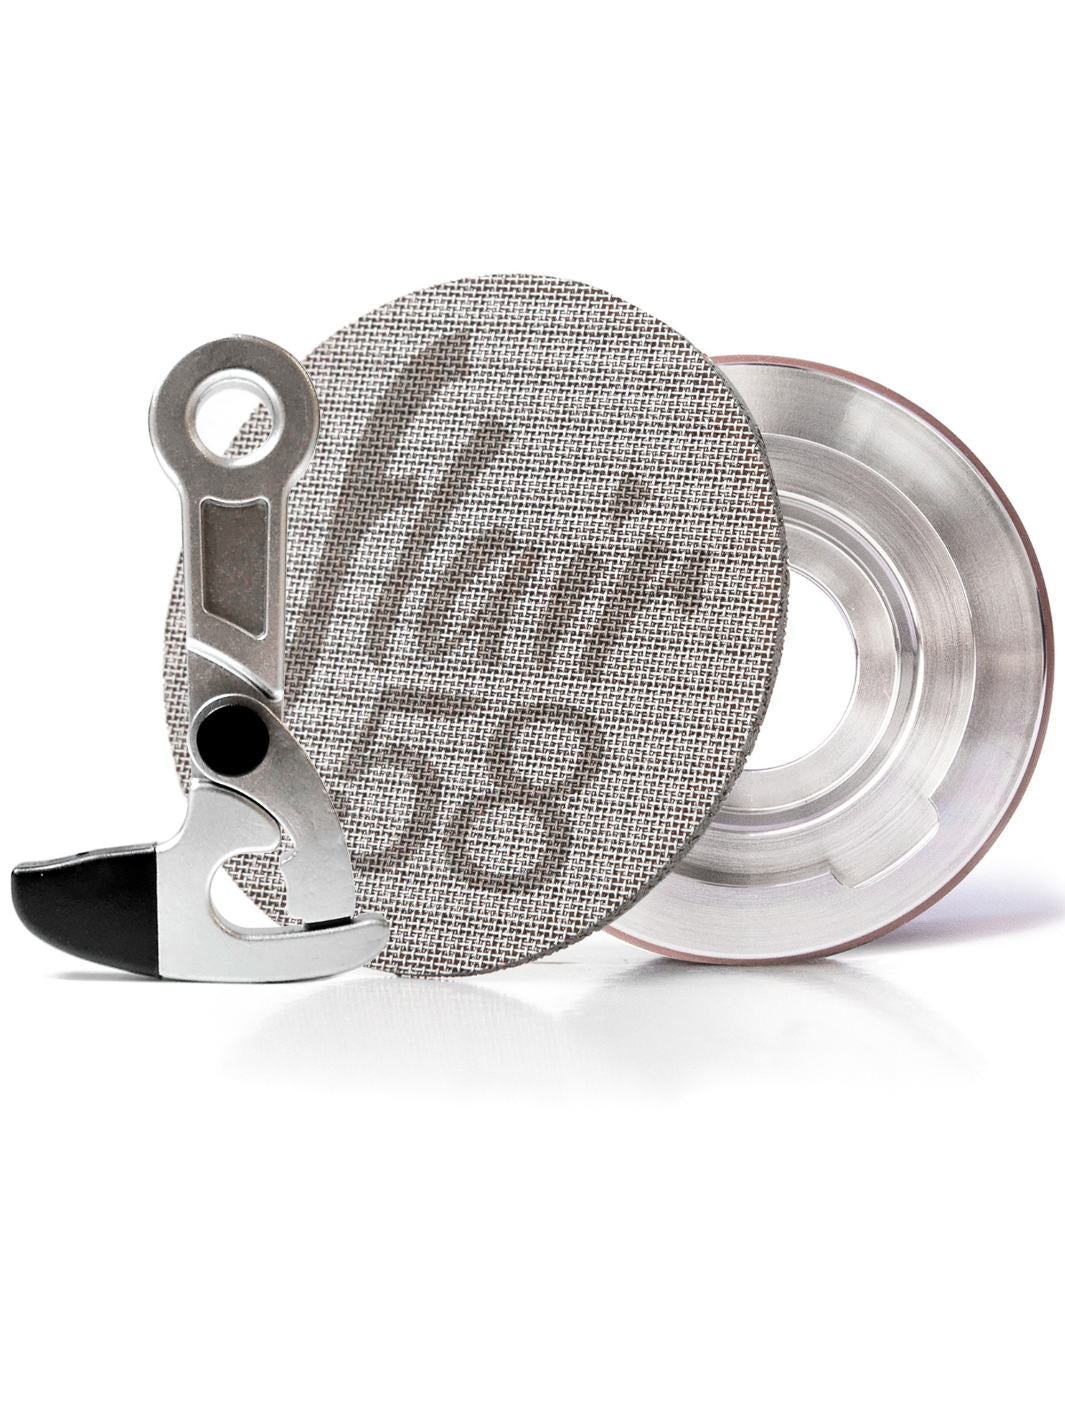 FLAIR 58 Valve Plunger Conversion Kit